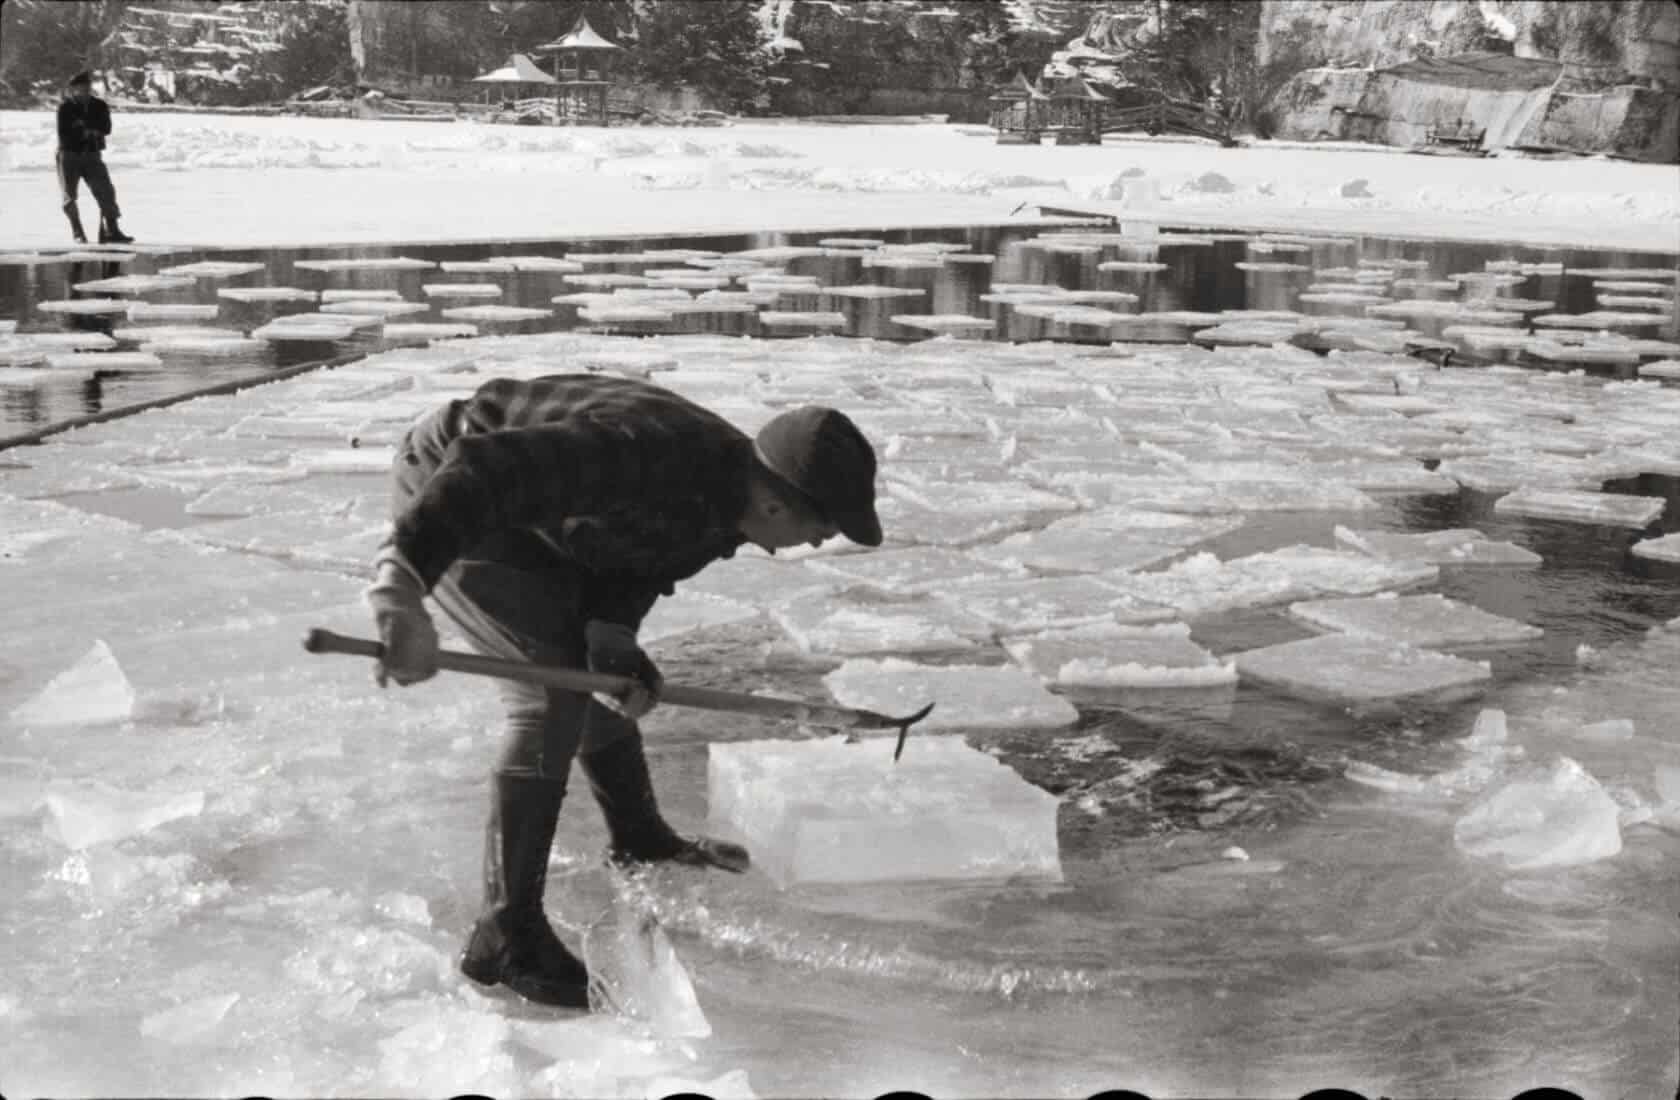 Ice harvesting on Lake Mohonk, 1939